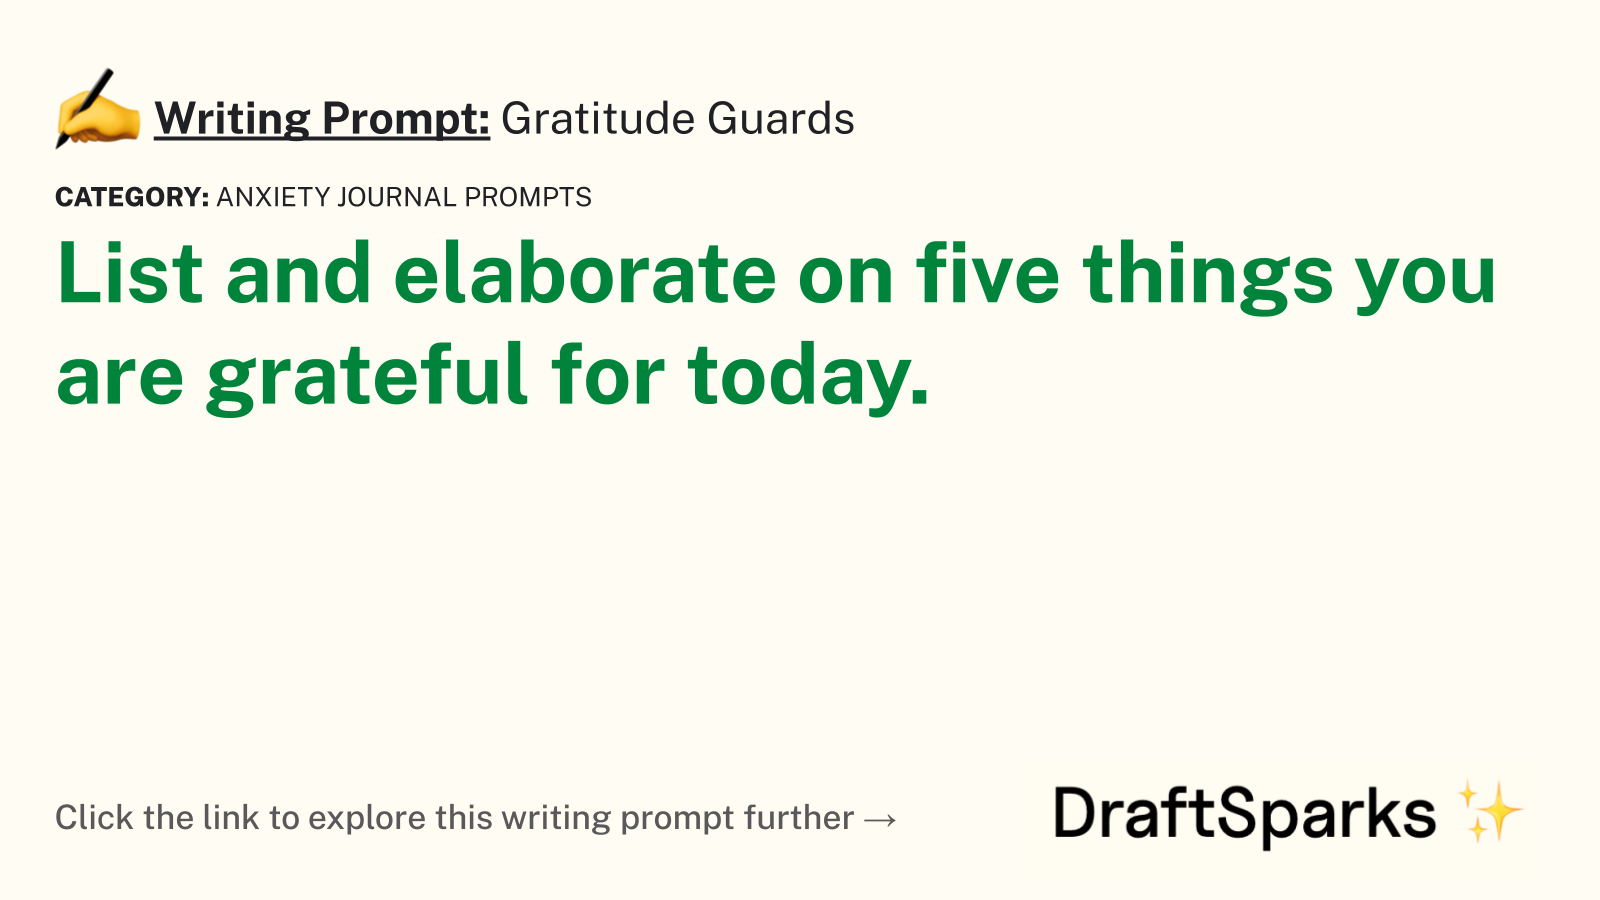 Gratitude Guards